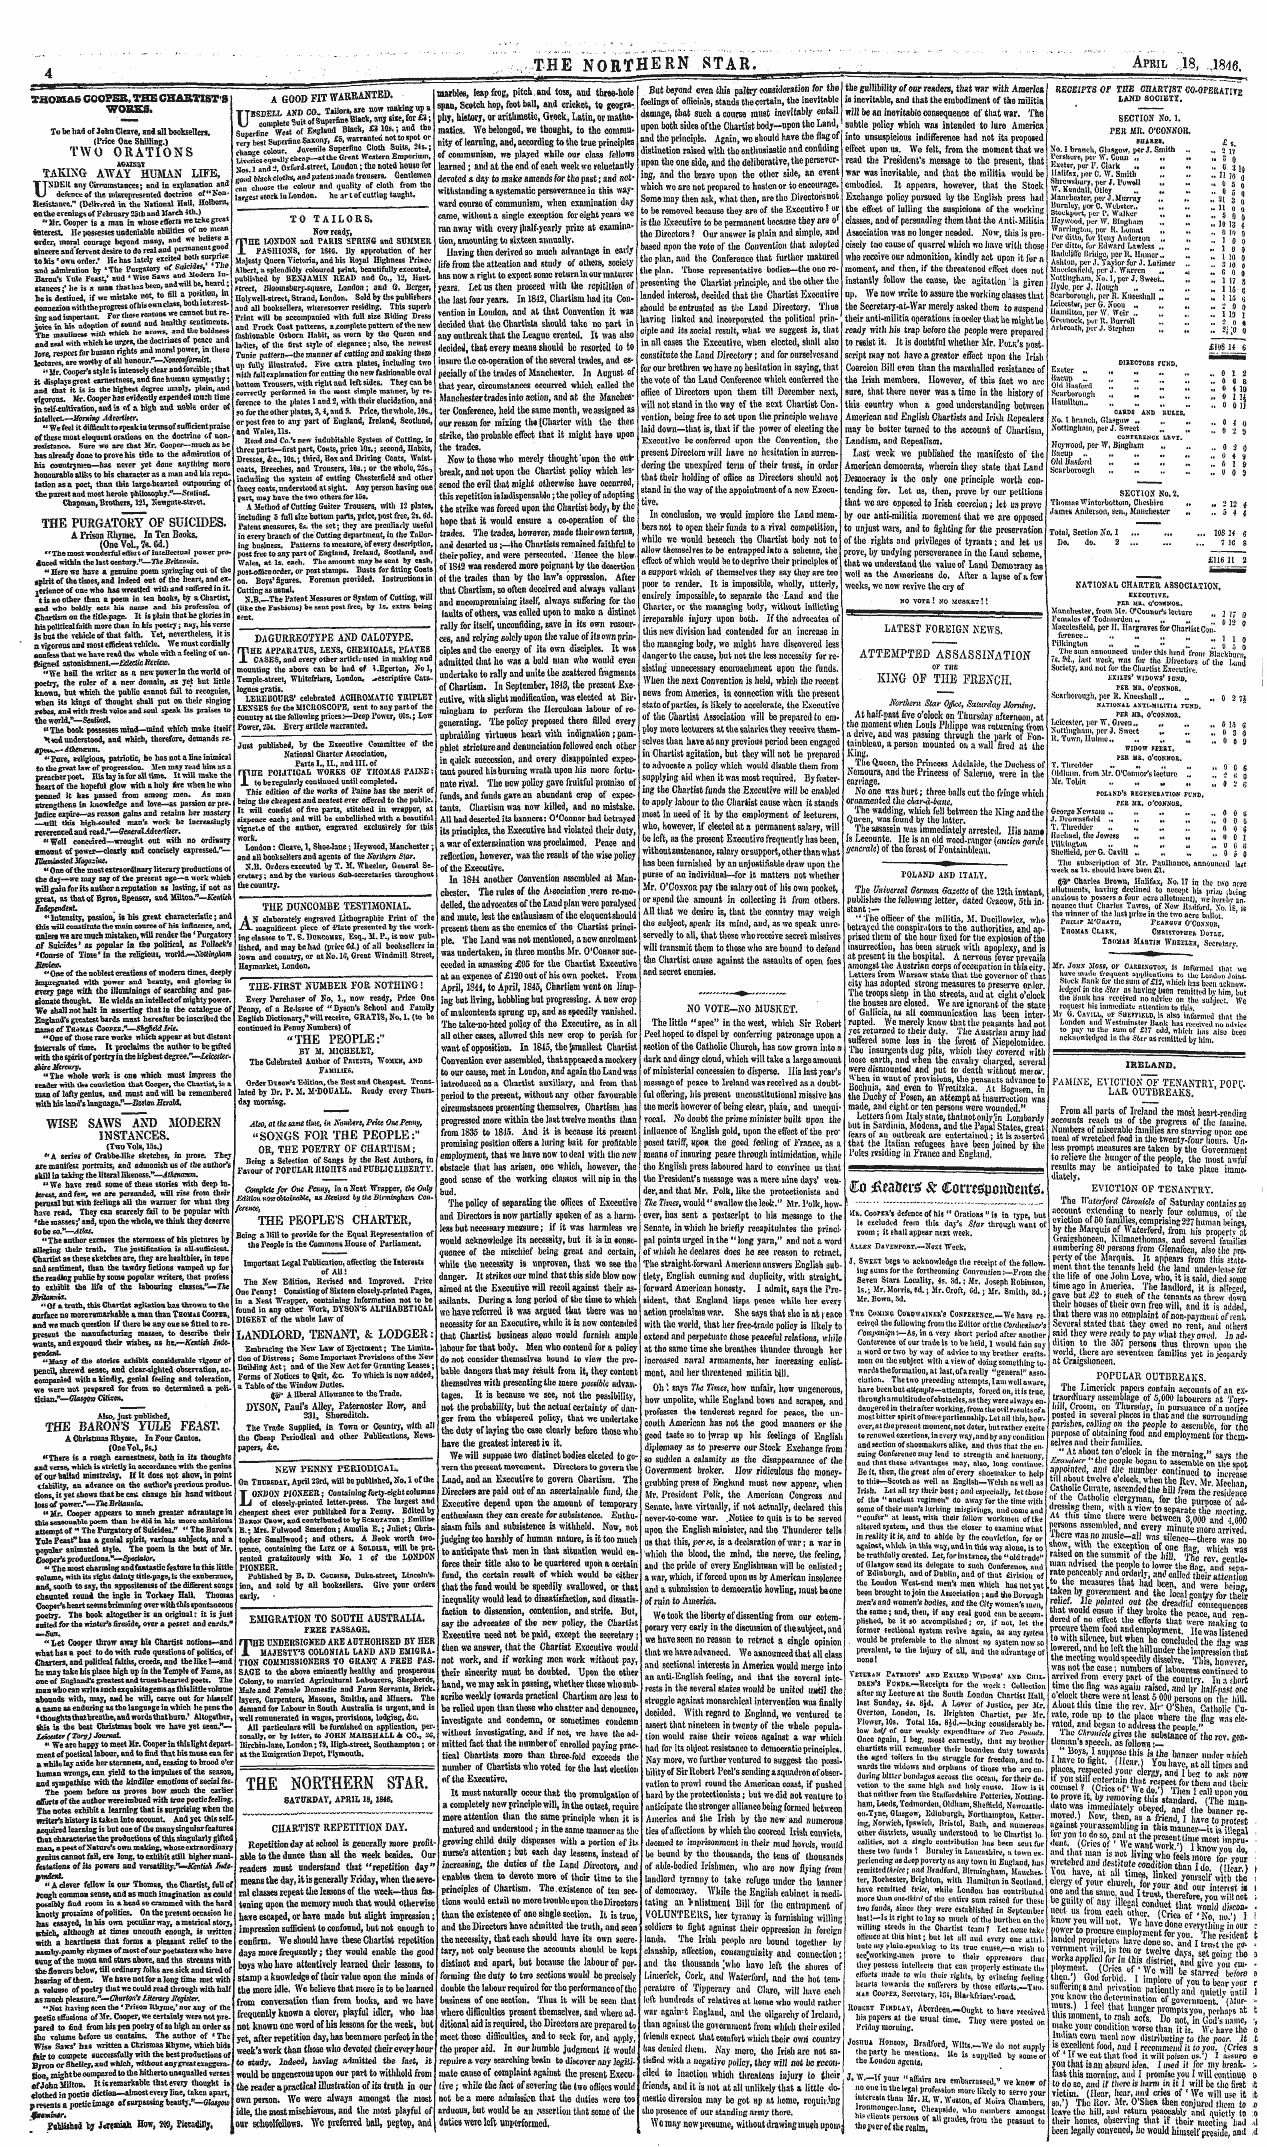 Northern Star (1837-1852): jS F Y, 3rd edition - Ad00412